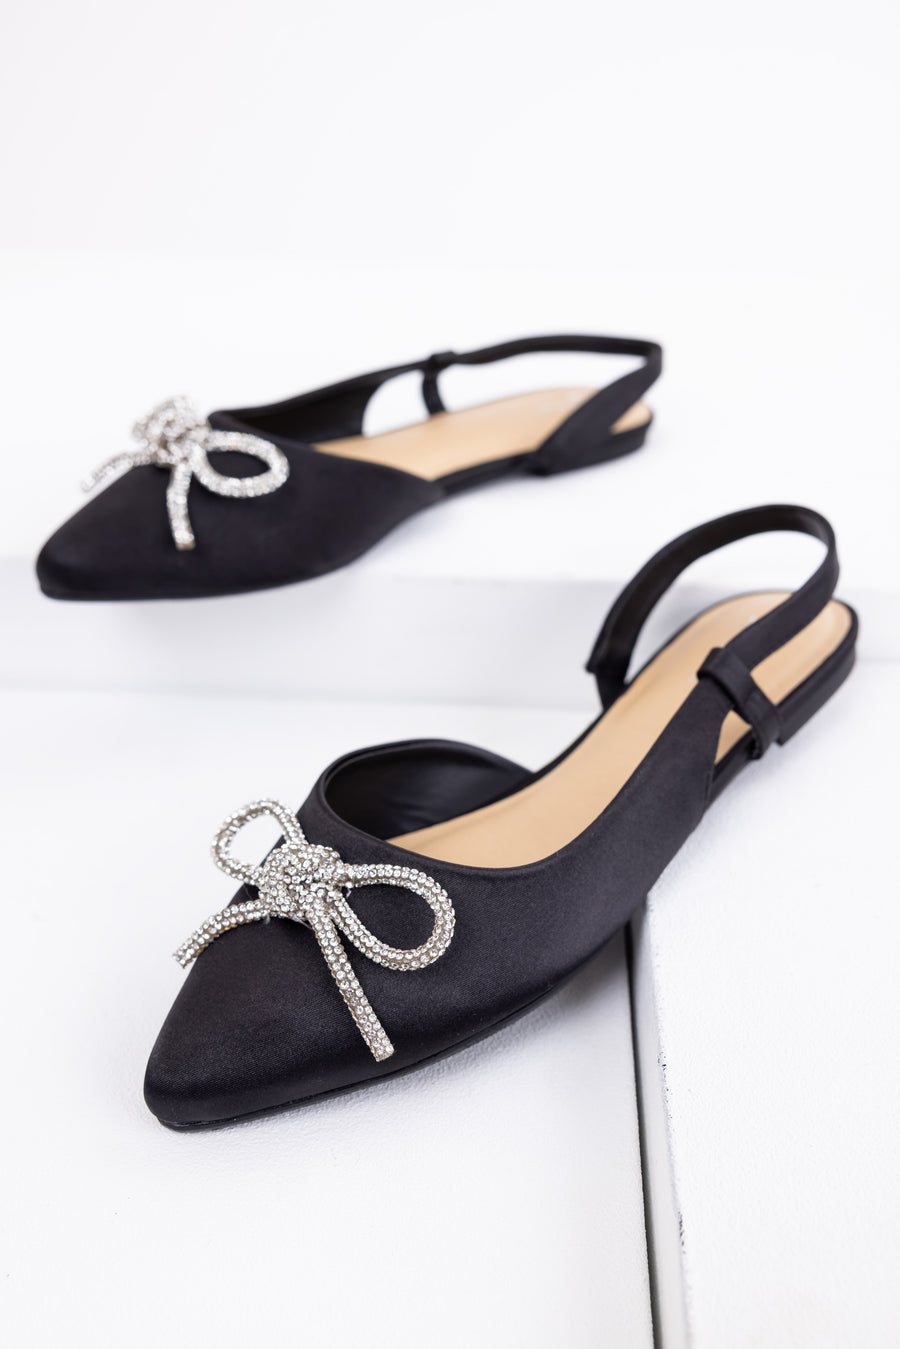 Black Pointed Toe Rhinestone Bow Flat Shoes